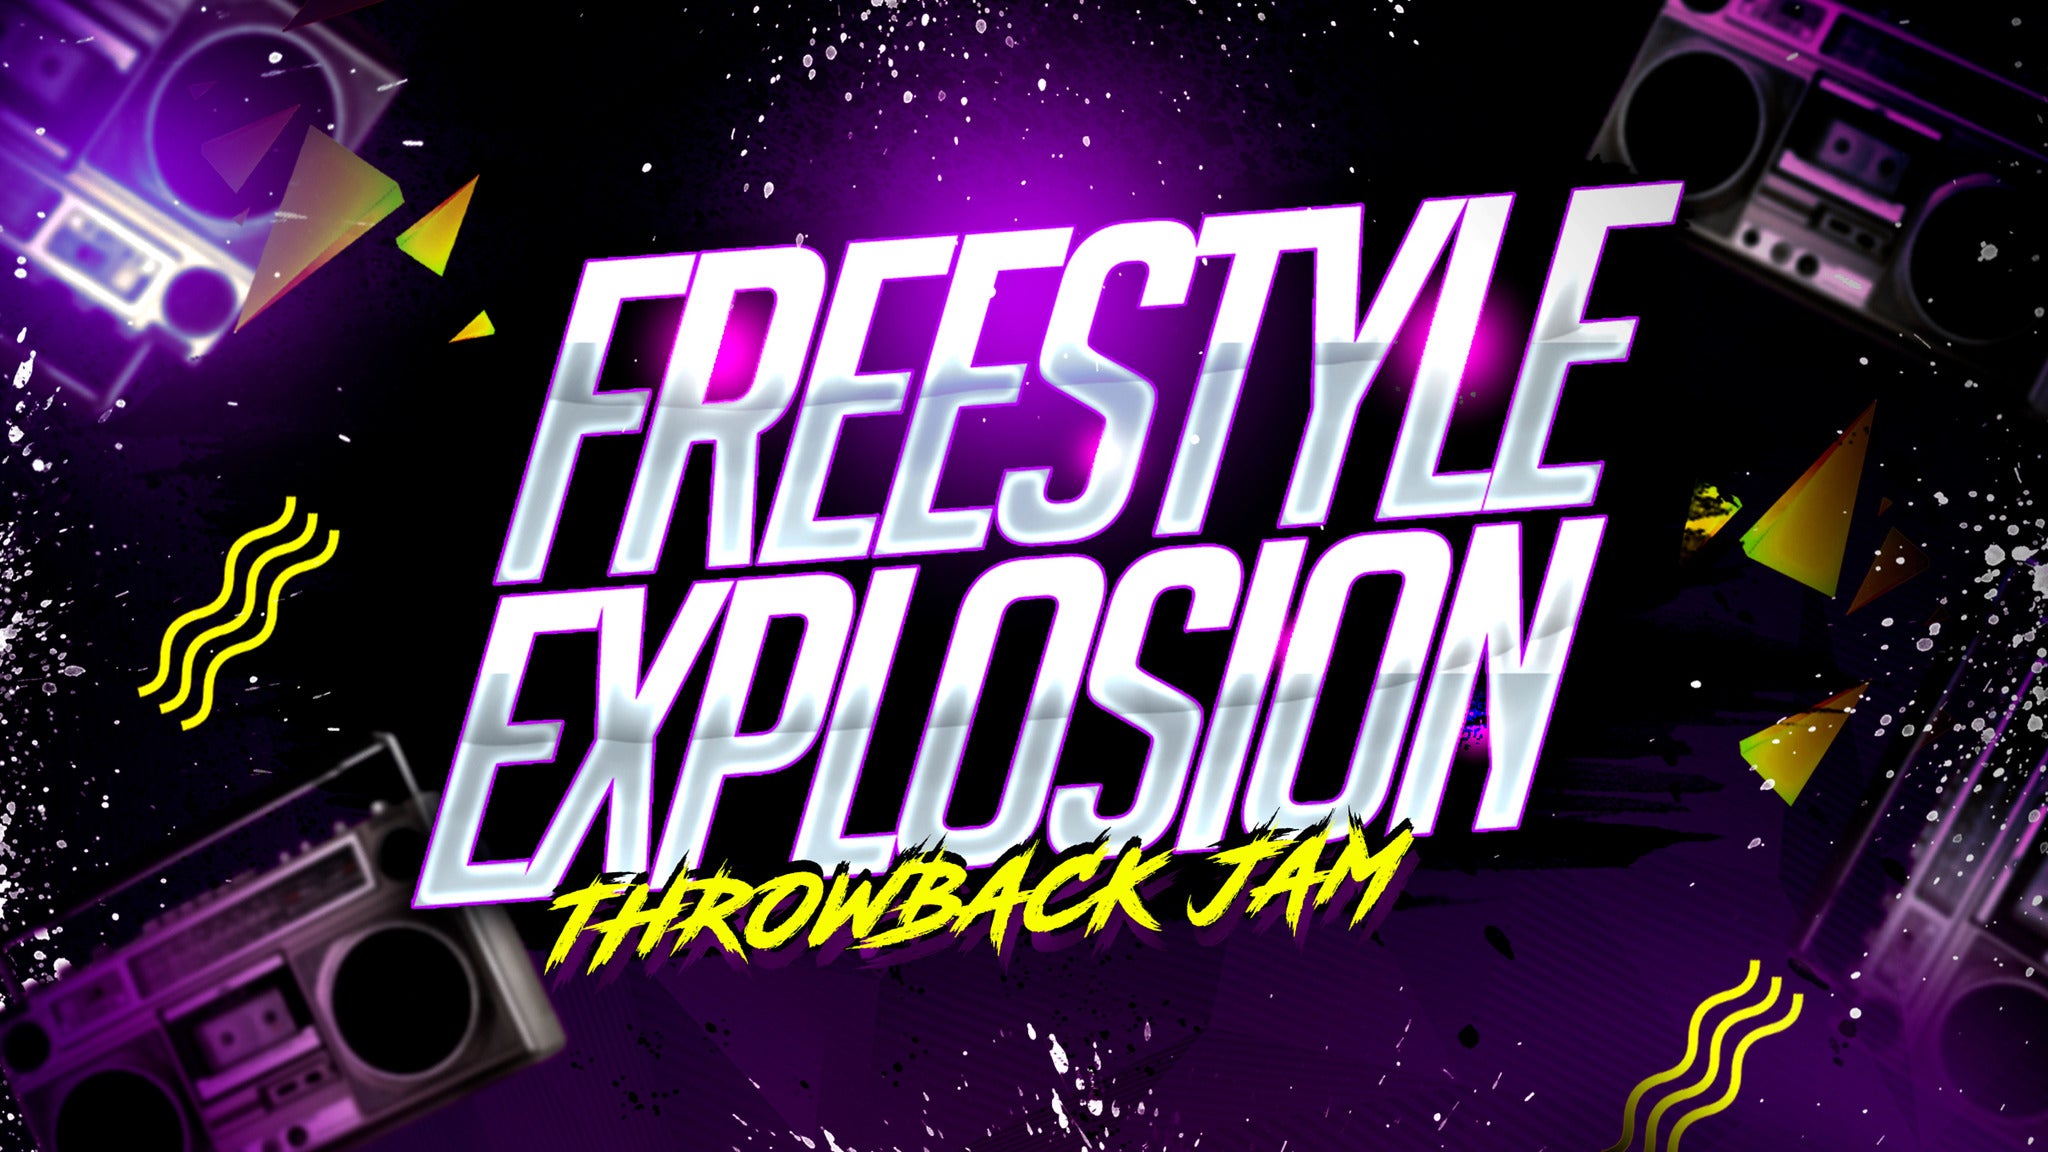 Freestyle Explosion Throwback Jam at SAP Center at San Jose